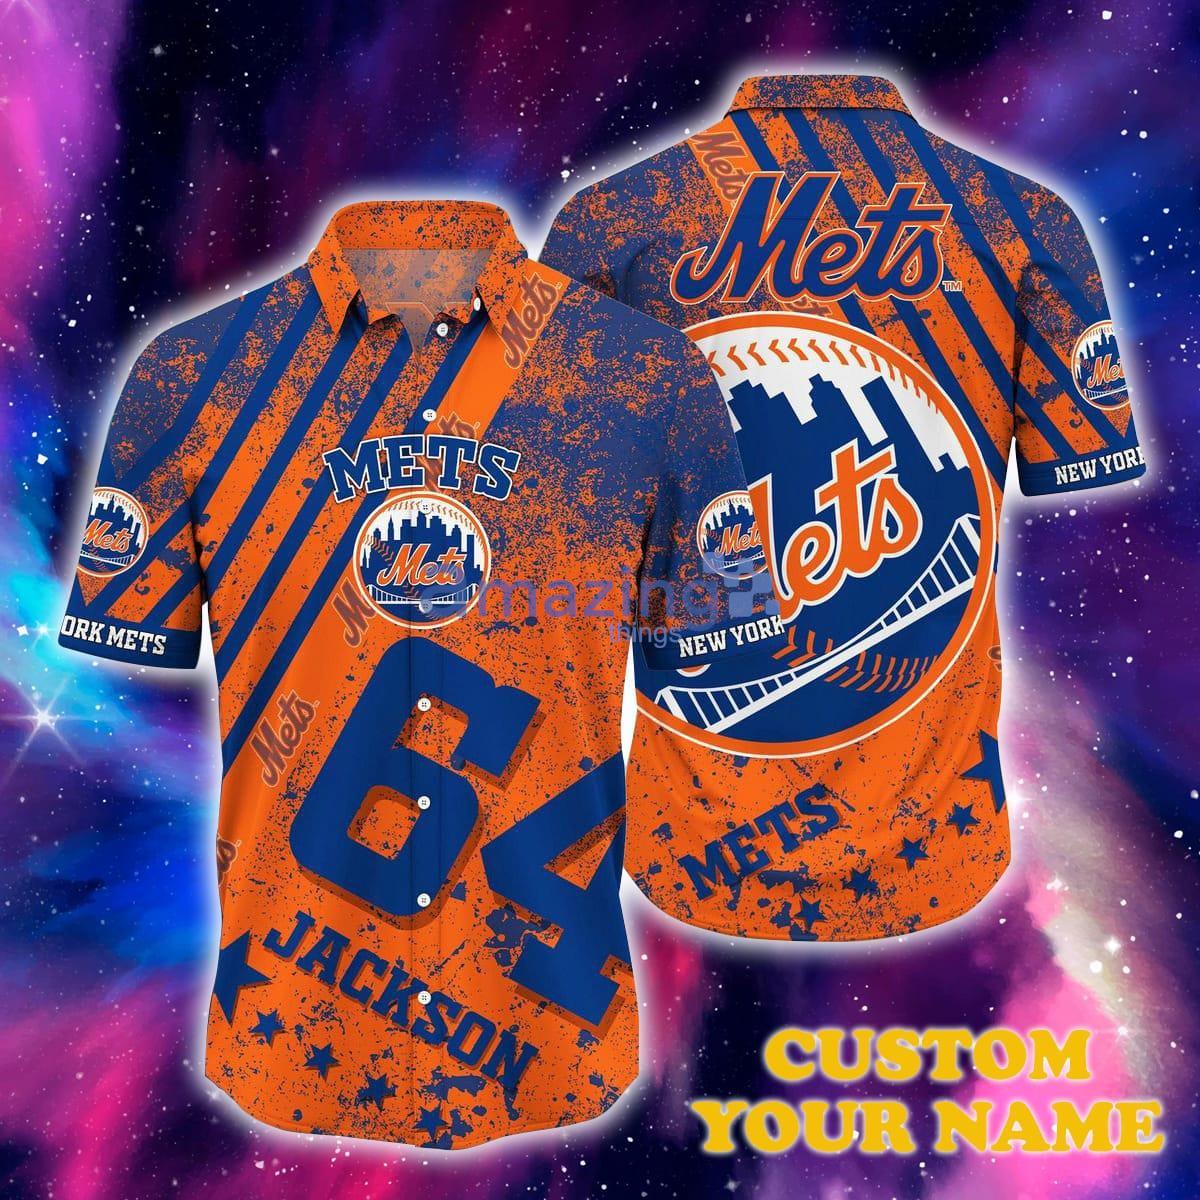 New York Mets MLB Soccer jersey edition